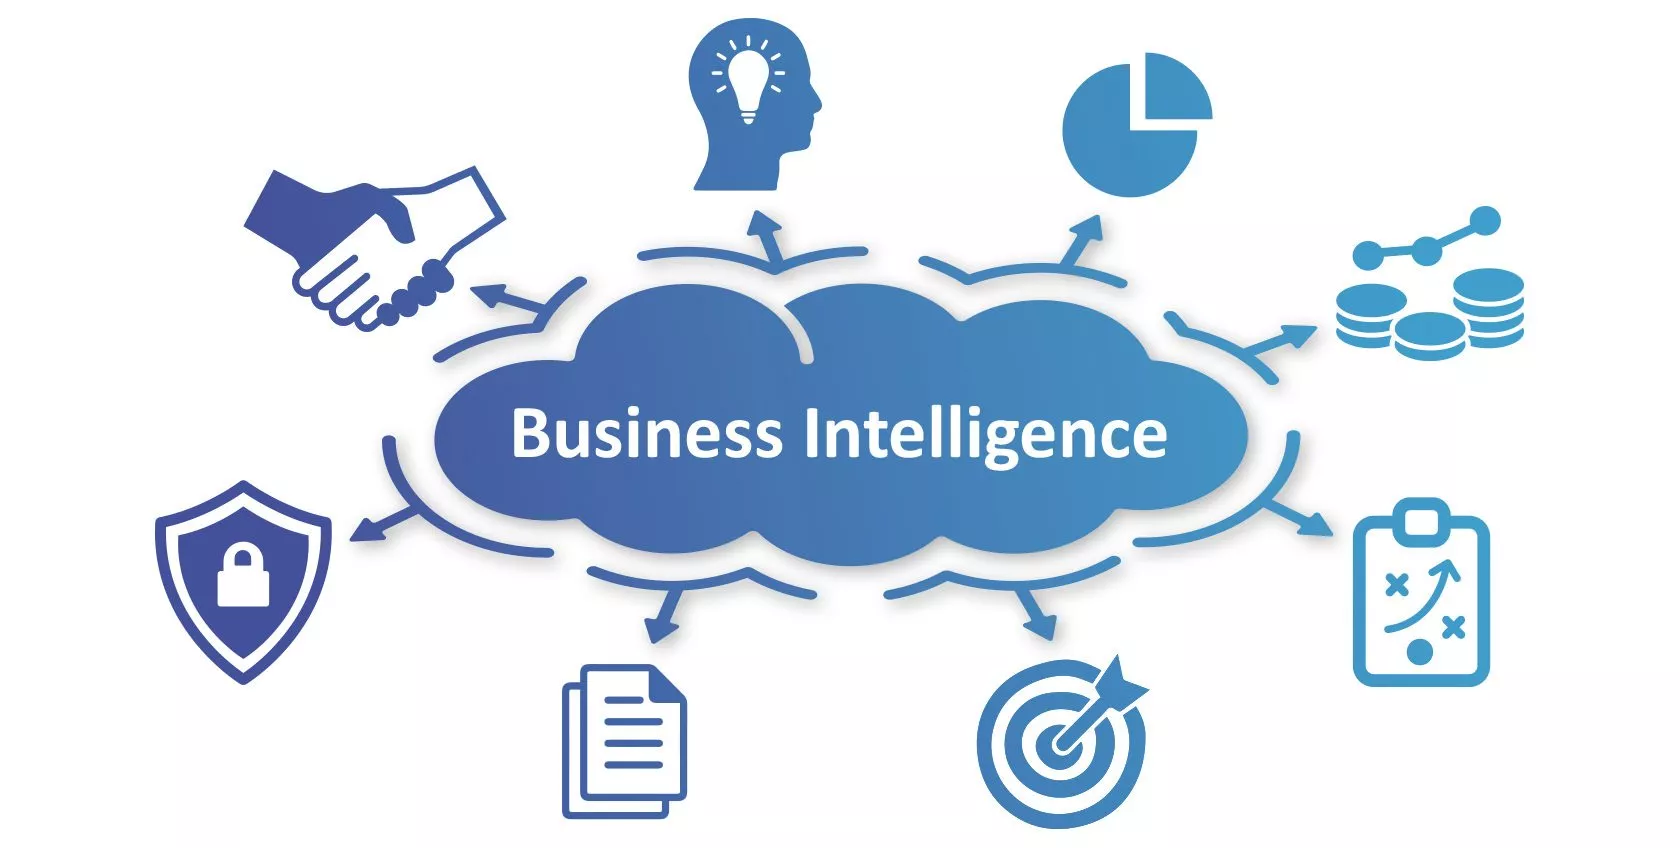 csm_business-intelligence_b137e16154.jpg